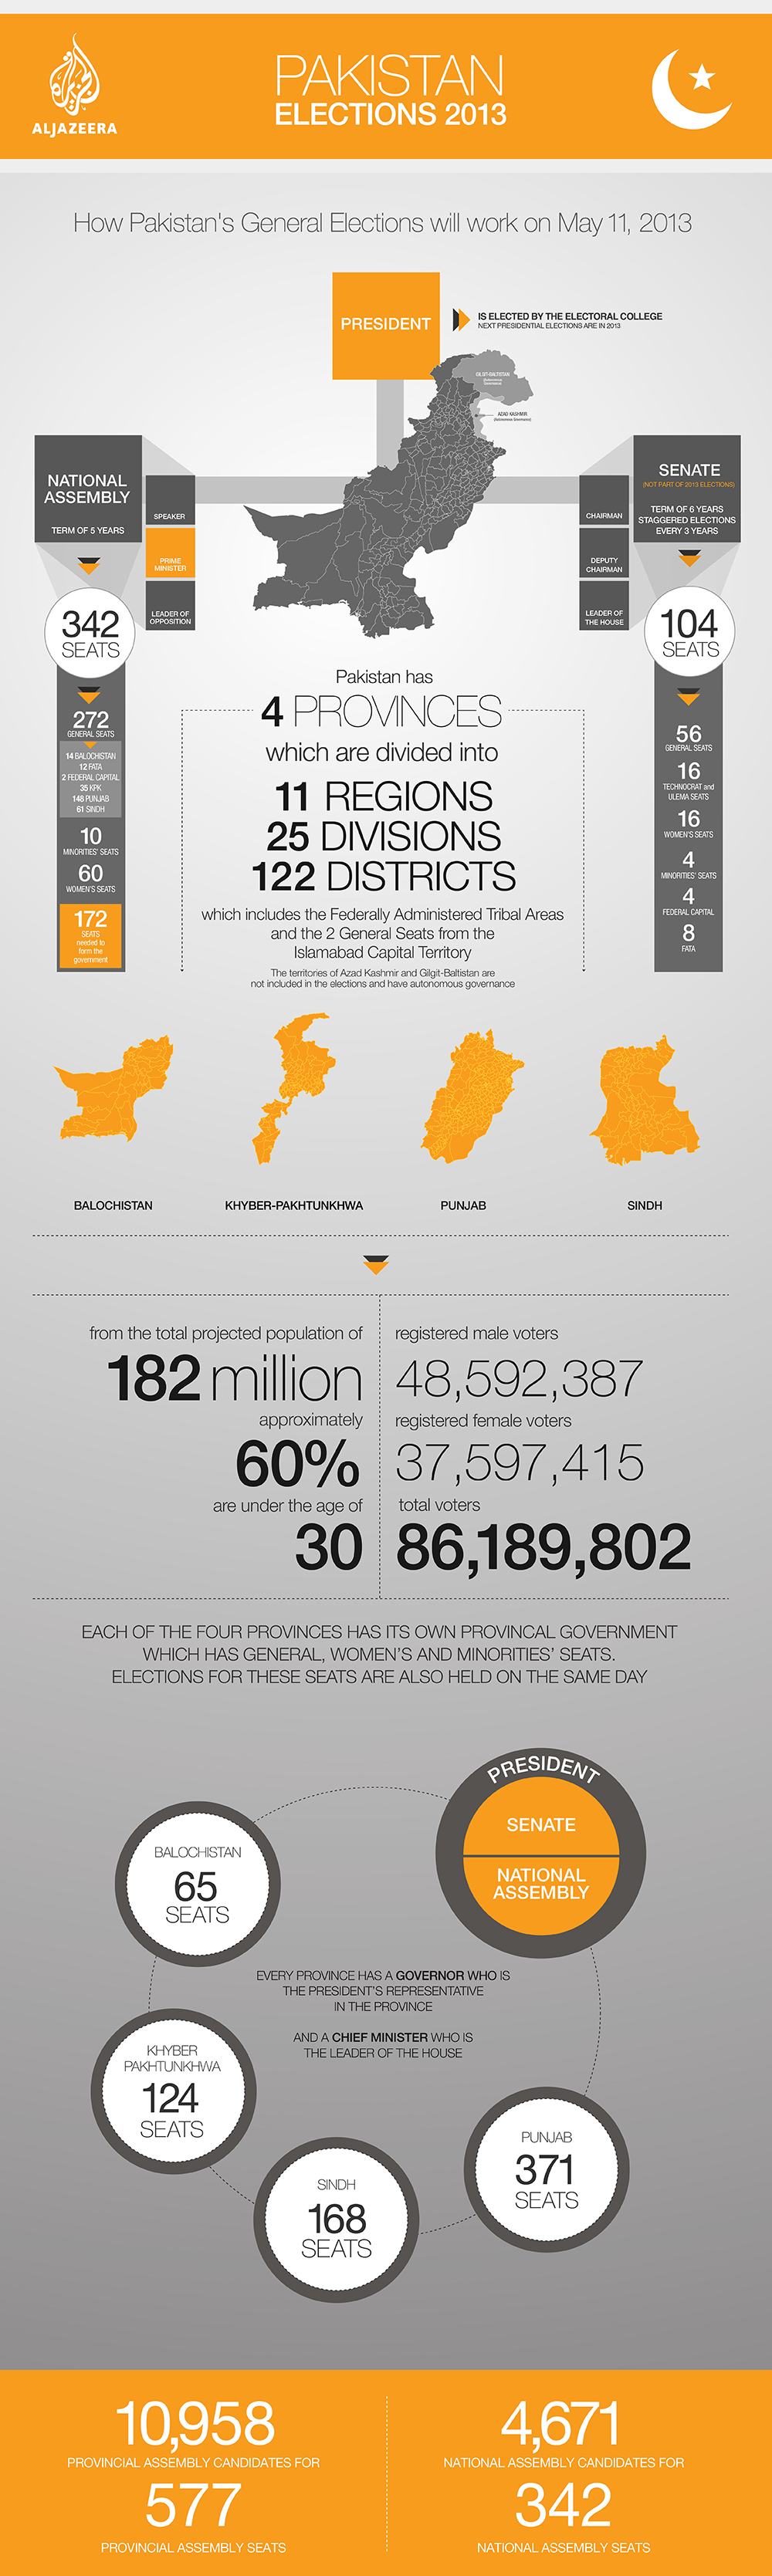 Pakistan elections infographic